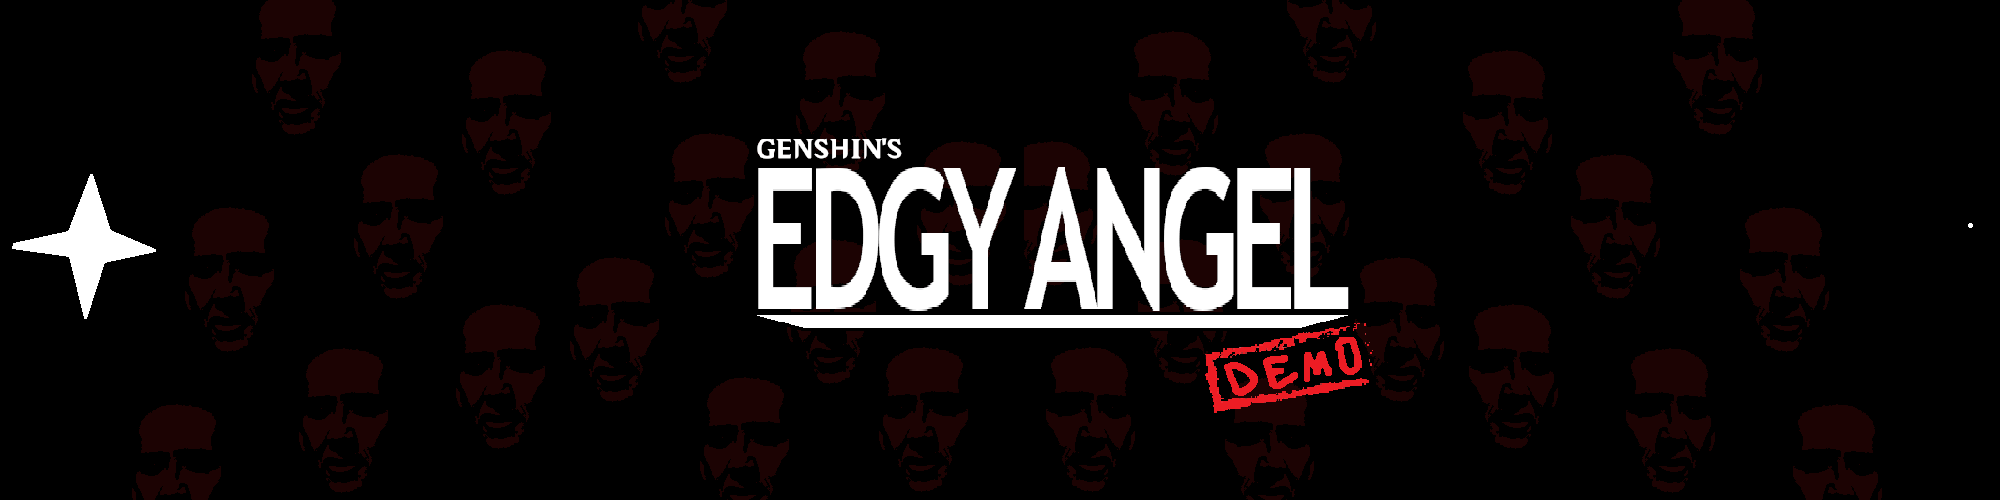 Genshin's EDGY ANGEL (rus)